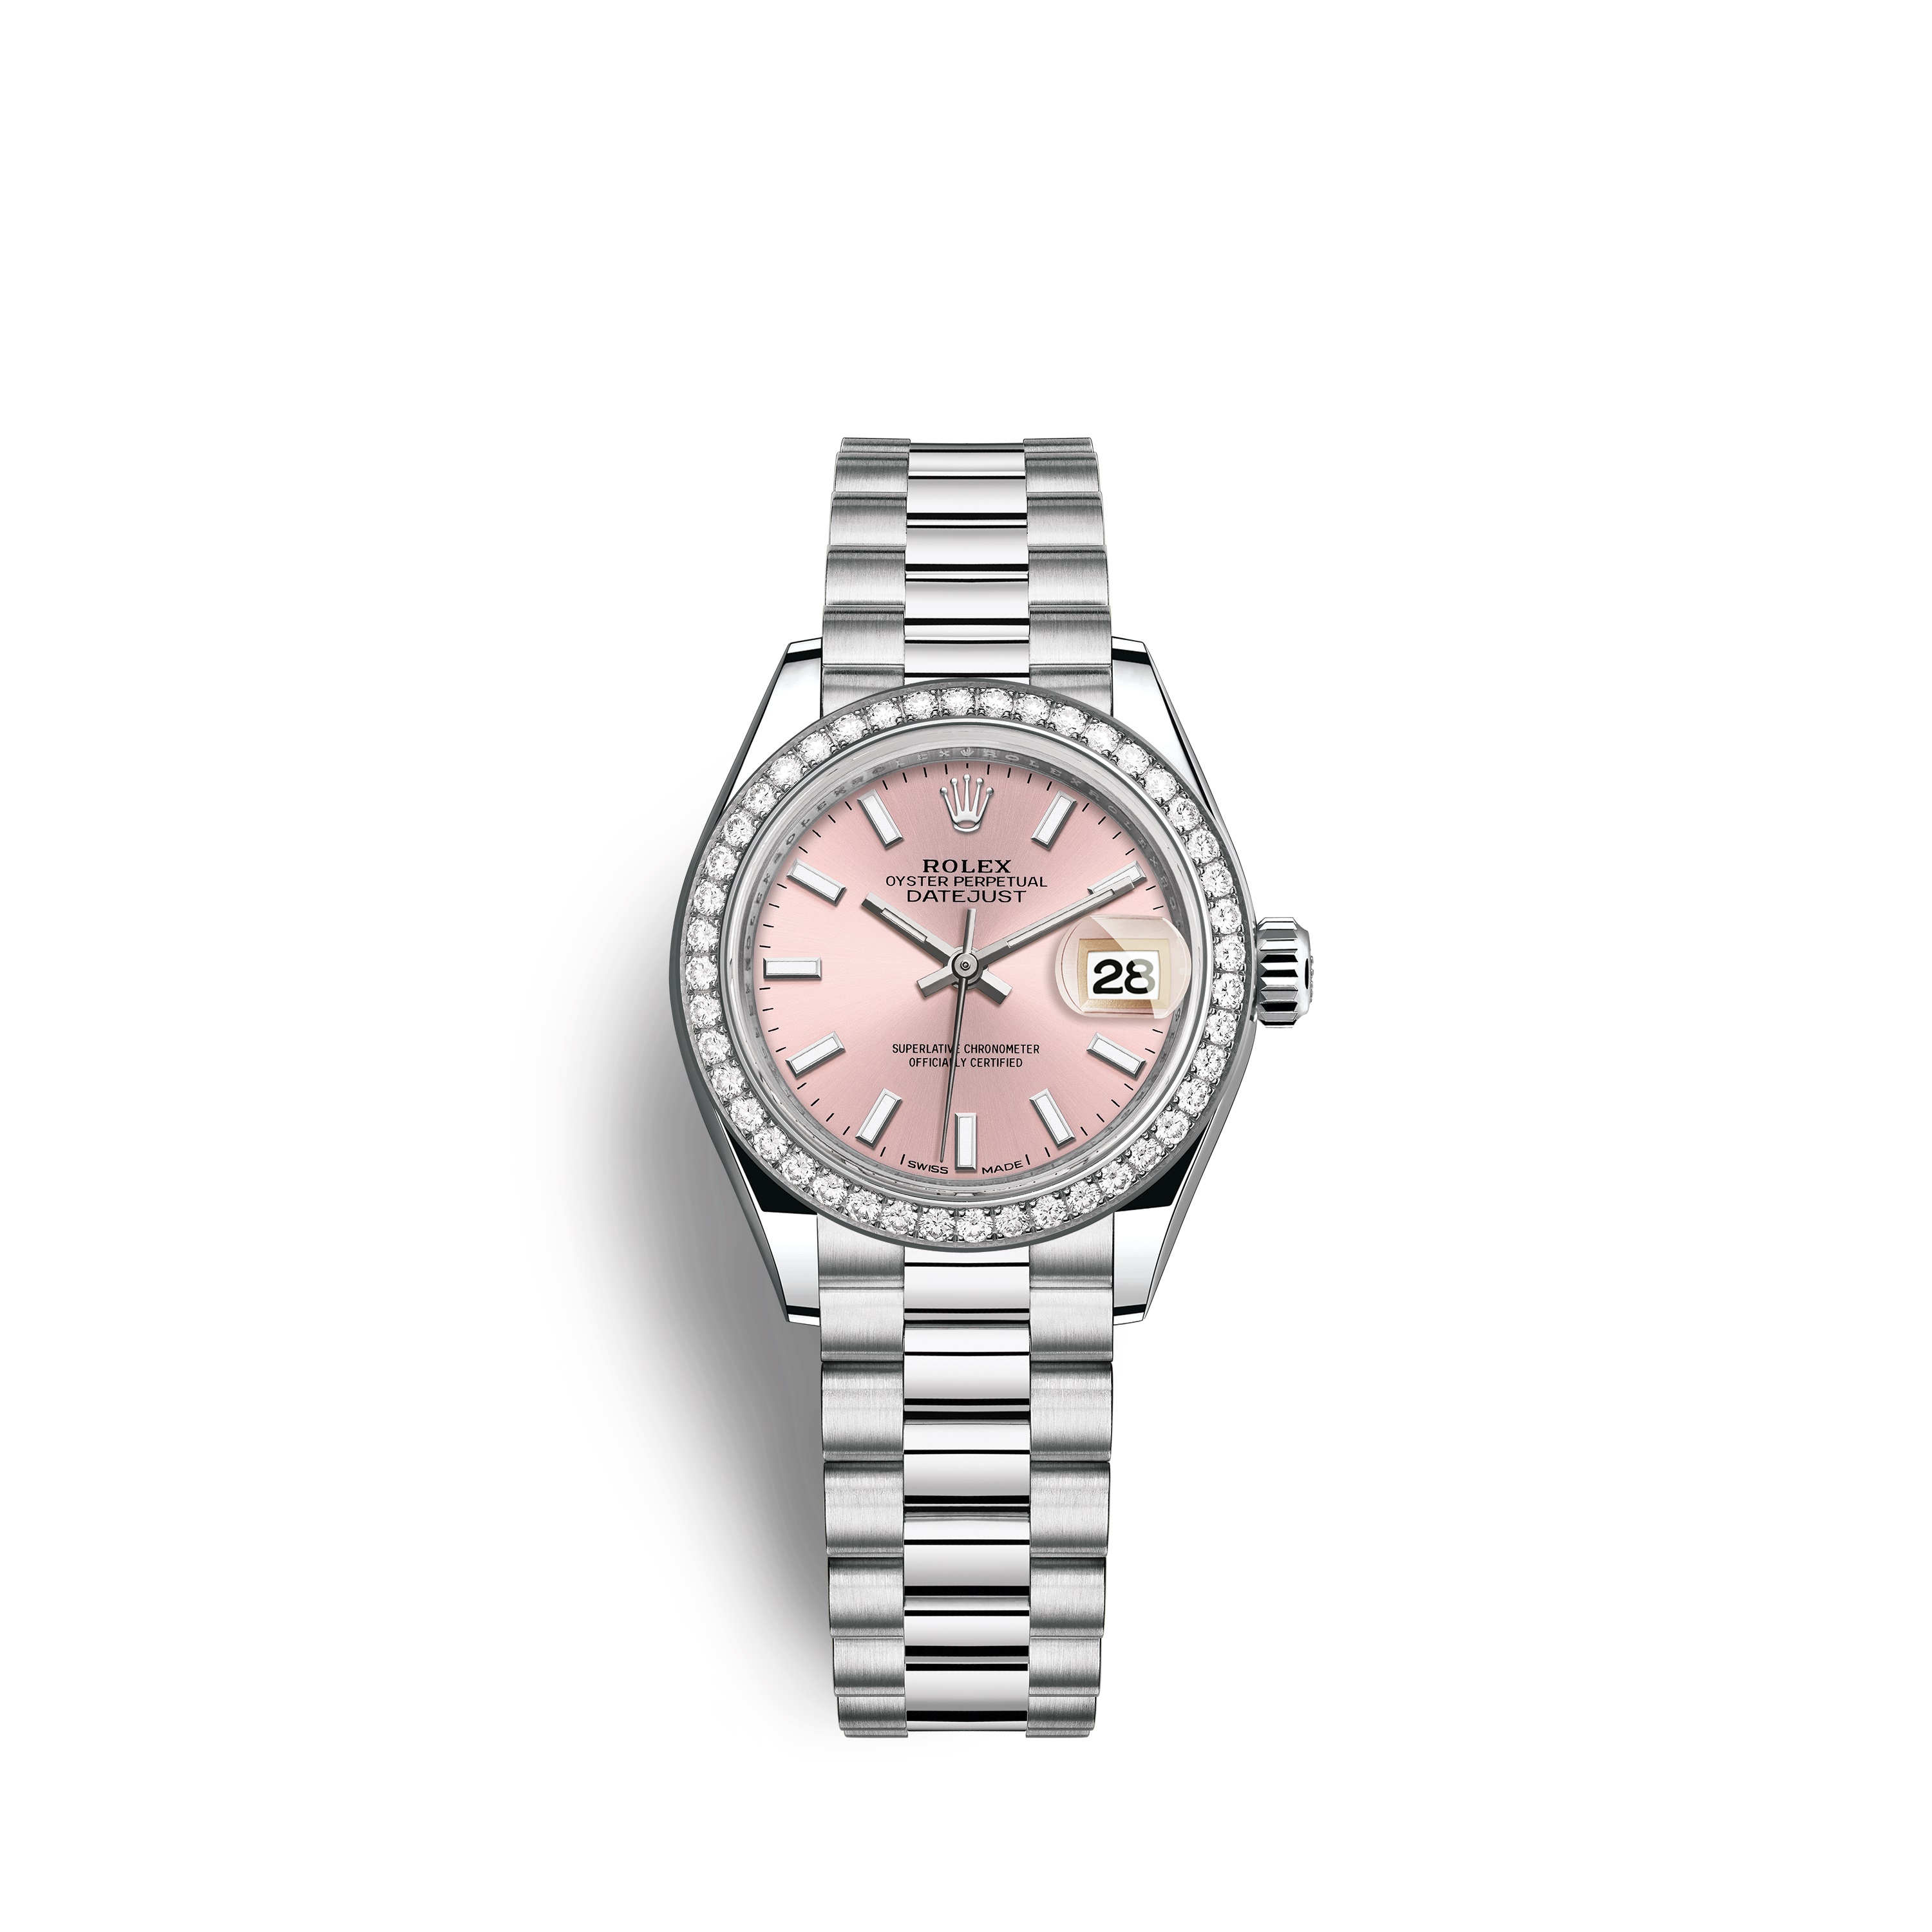 Lady-Datejust 28 279136RBR Platinum & Diamonds Watch (Pink)